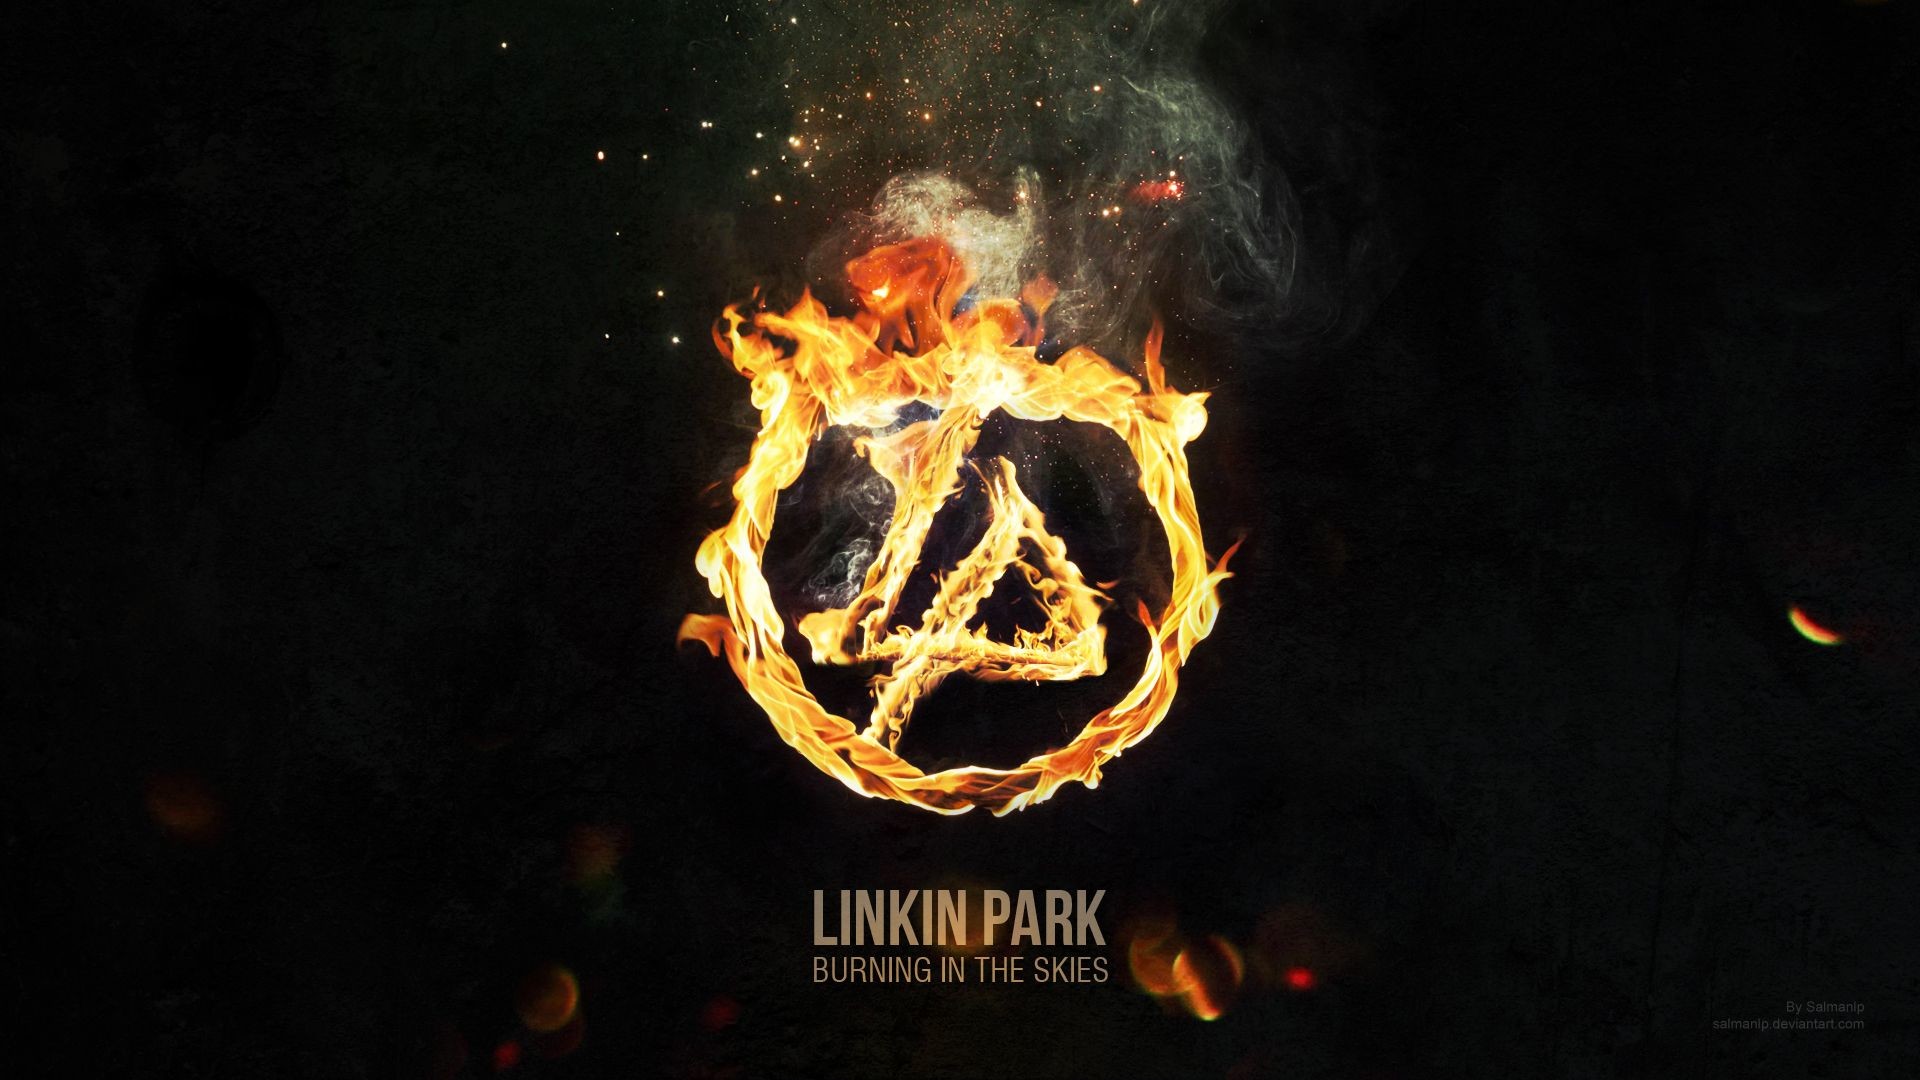 1920x1080 Linkin Park Burning In The Skies Hd Wallpaper 2018